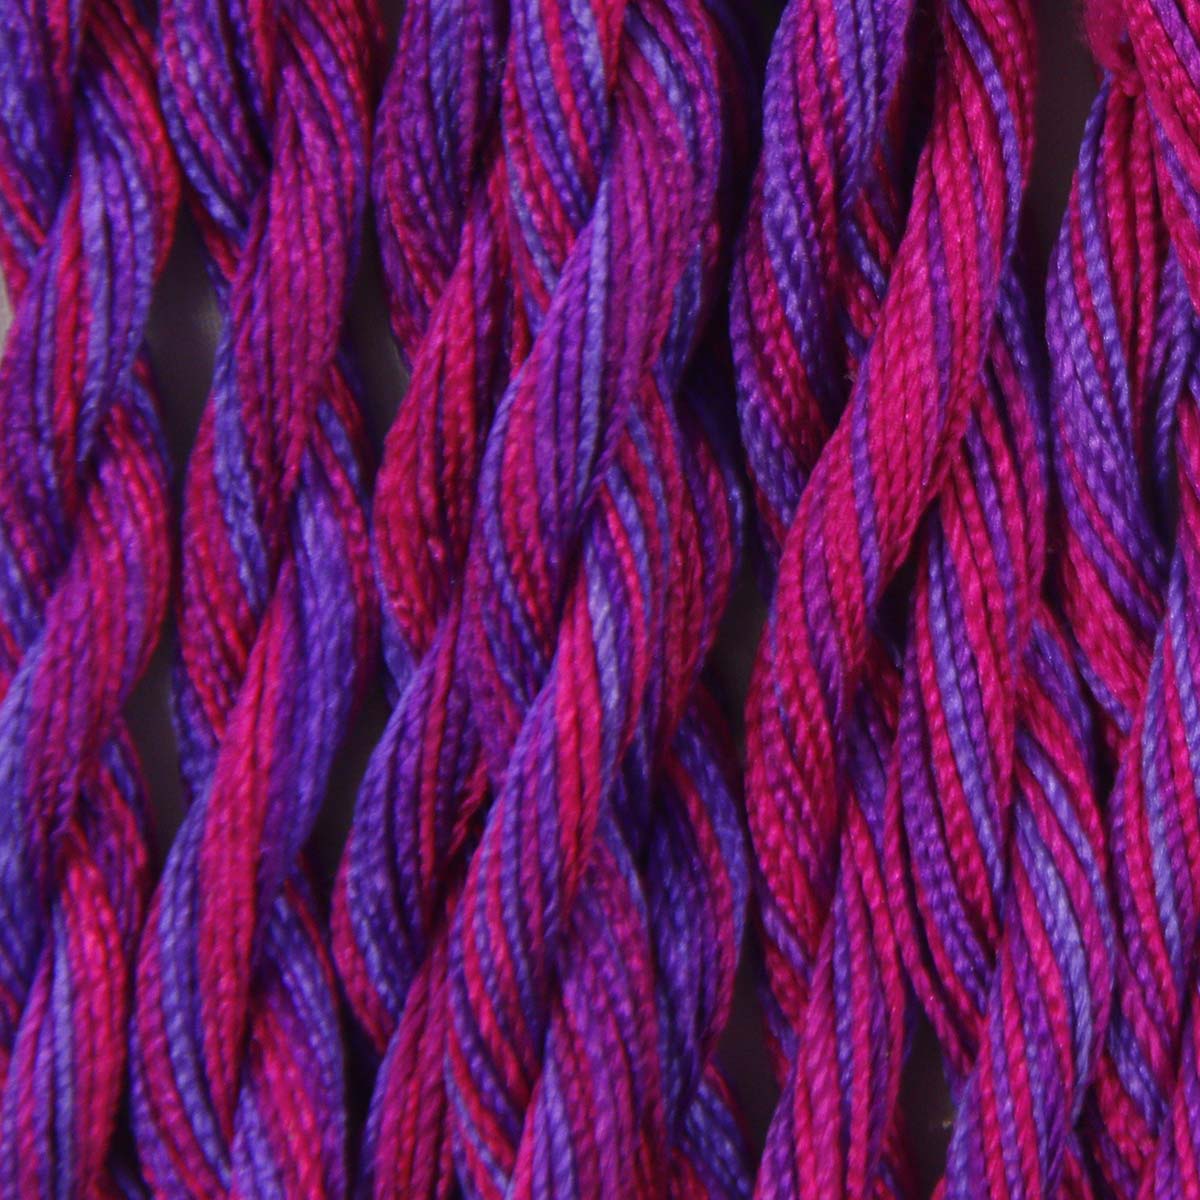 www.colourstreams.com.au Colour Streams Hand Dyed Silk Threads Silken Strands Ophir Exotic Lights Aurora Slow Stitch Embroidery Textile Arts Fibre DL 35 Mardigras Purple Pink